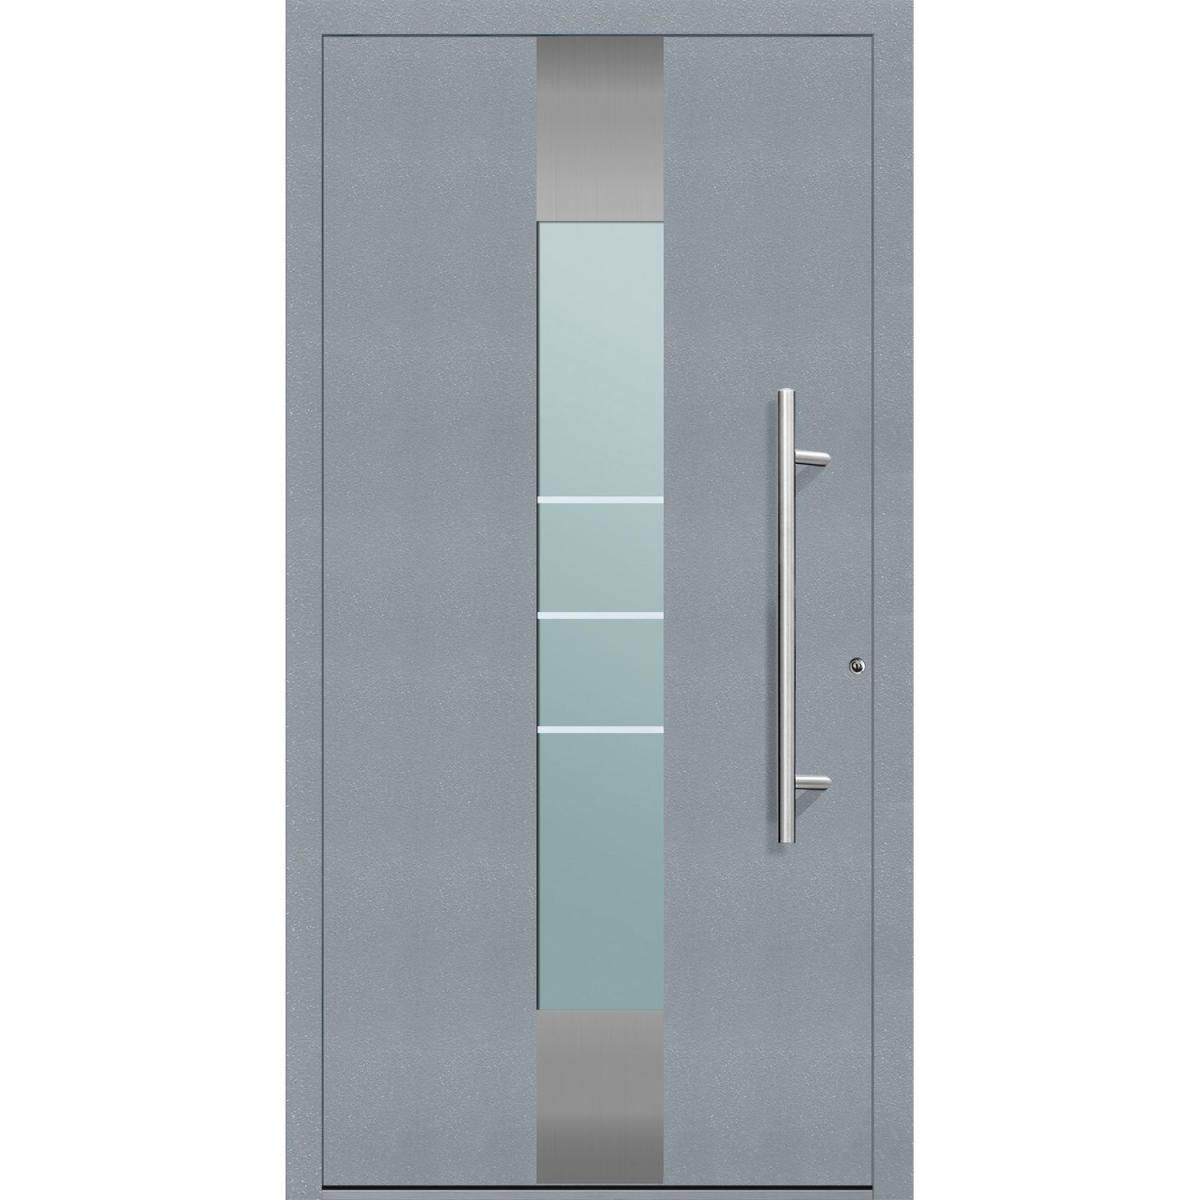 Aluminium Sicherheits-Haustür „Catania Exklusiv“, 75mm, grau, 100x210 cm, Anschlag rechts, inkl. Griffset